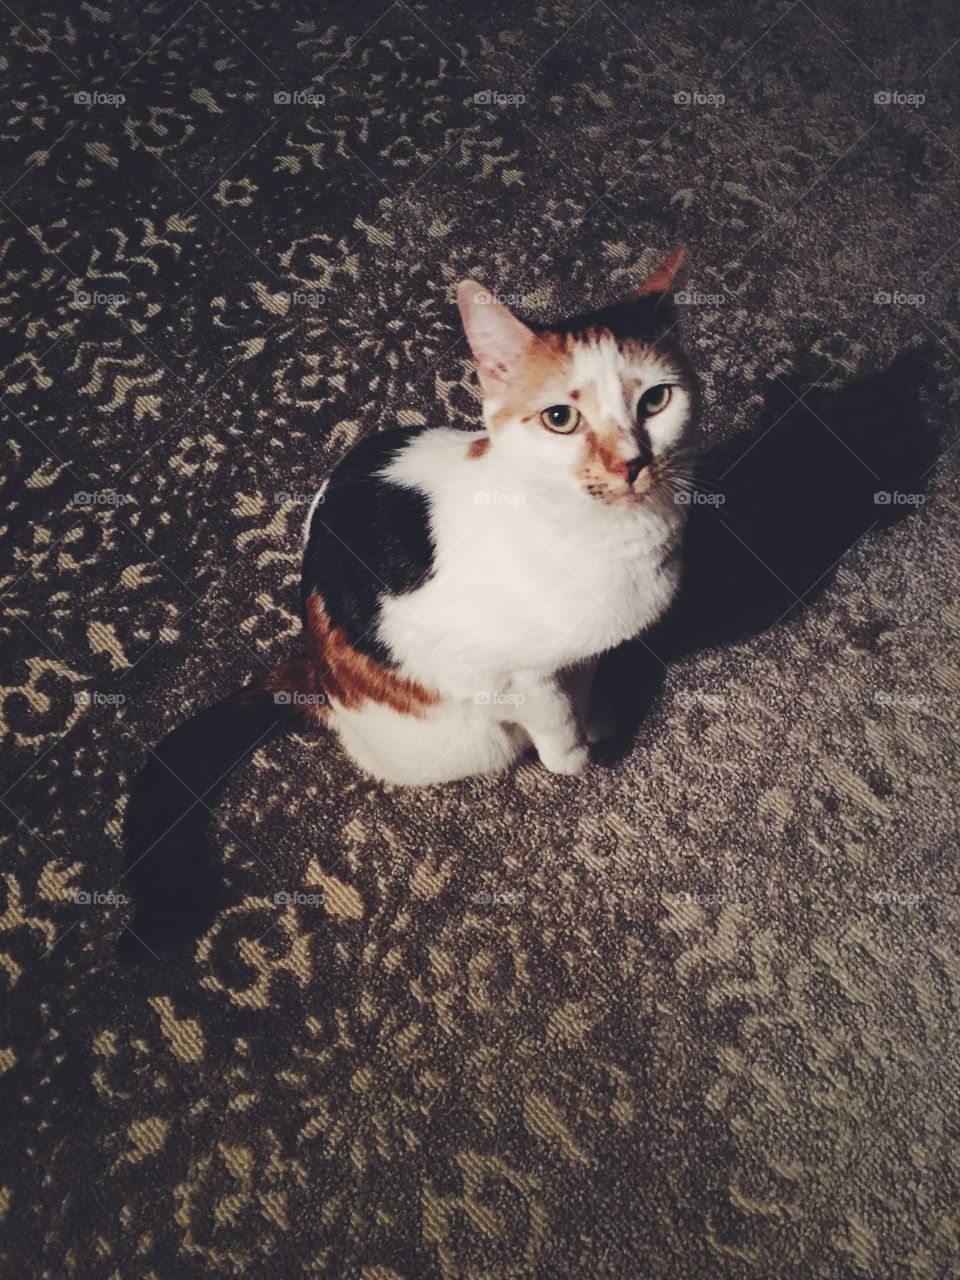 Sweet kitten on a rug. 